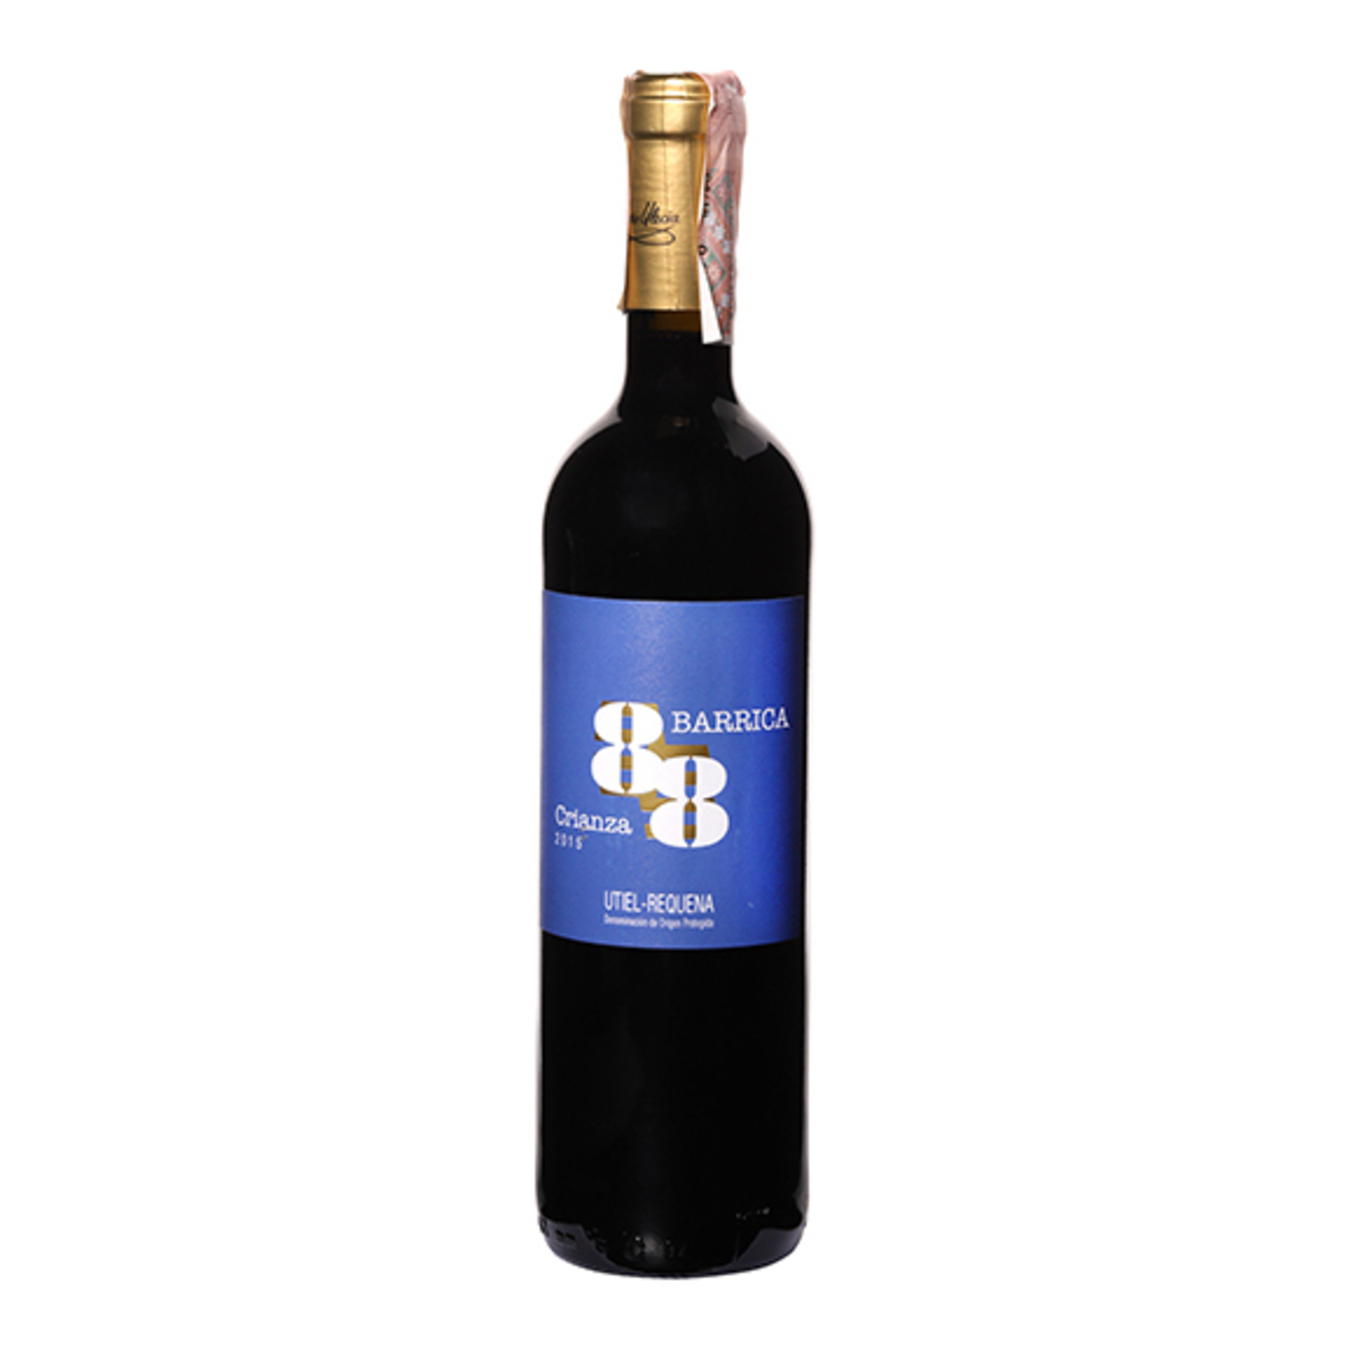 Barrica 88 Crianza do Utiel-Requena Red Dry Wine 13% 0,75l